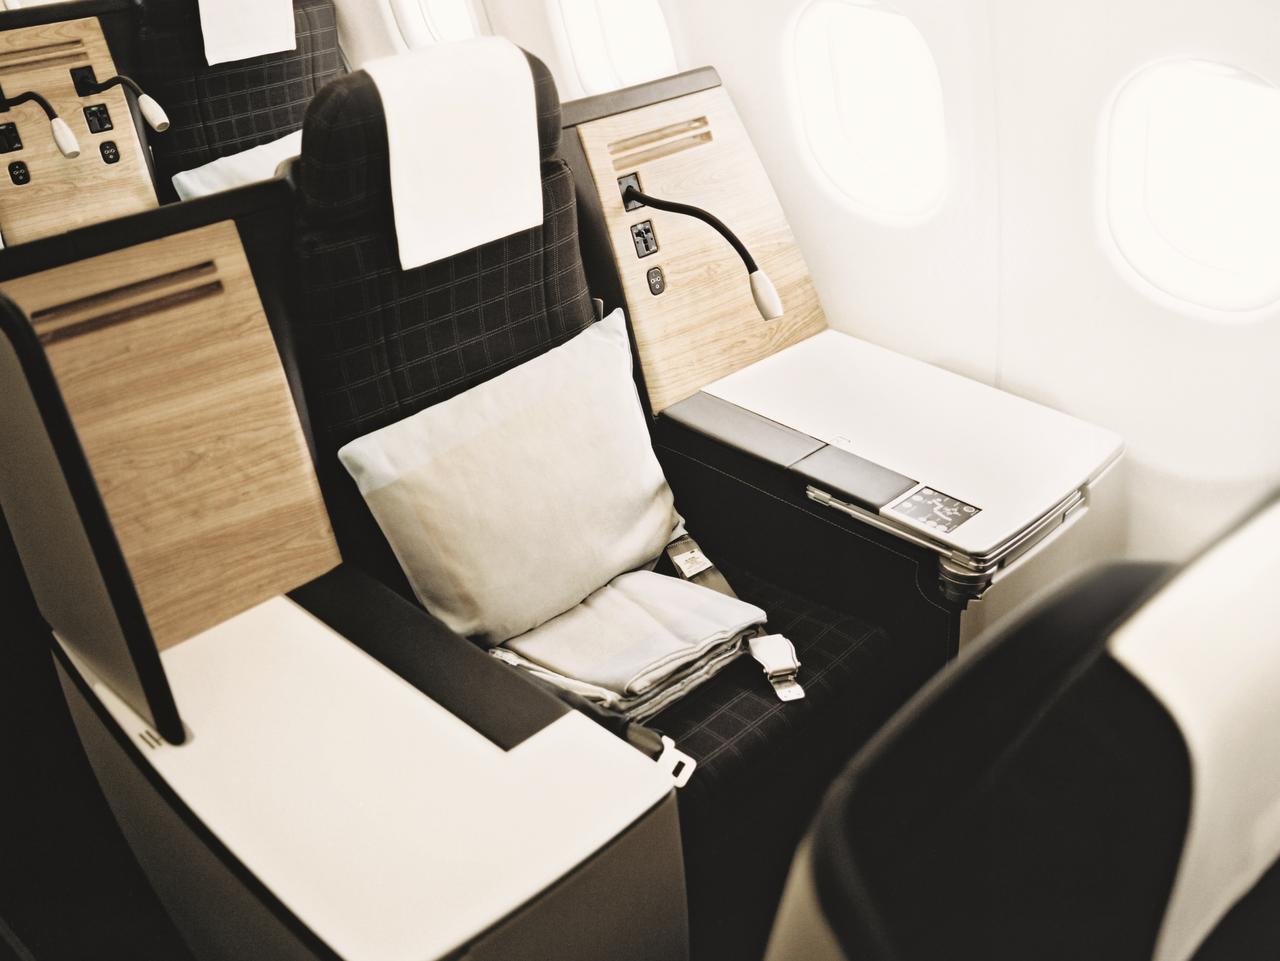 Throne seats on Swiss Air